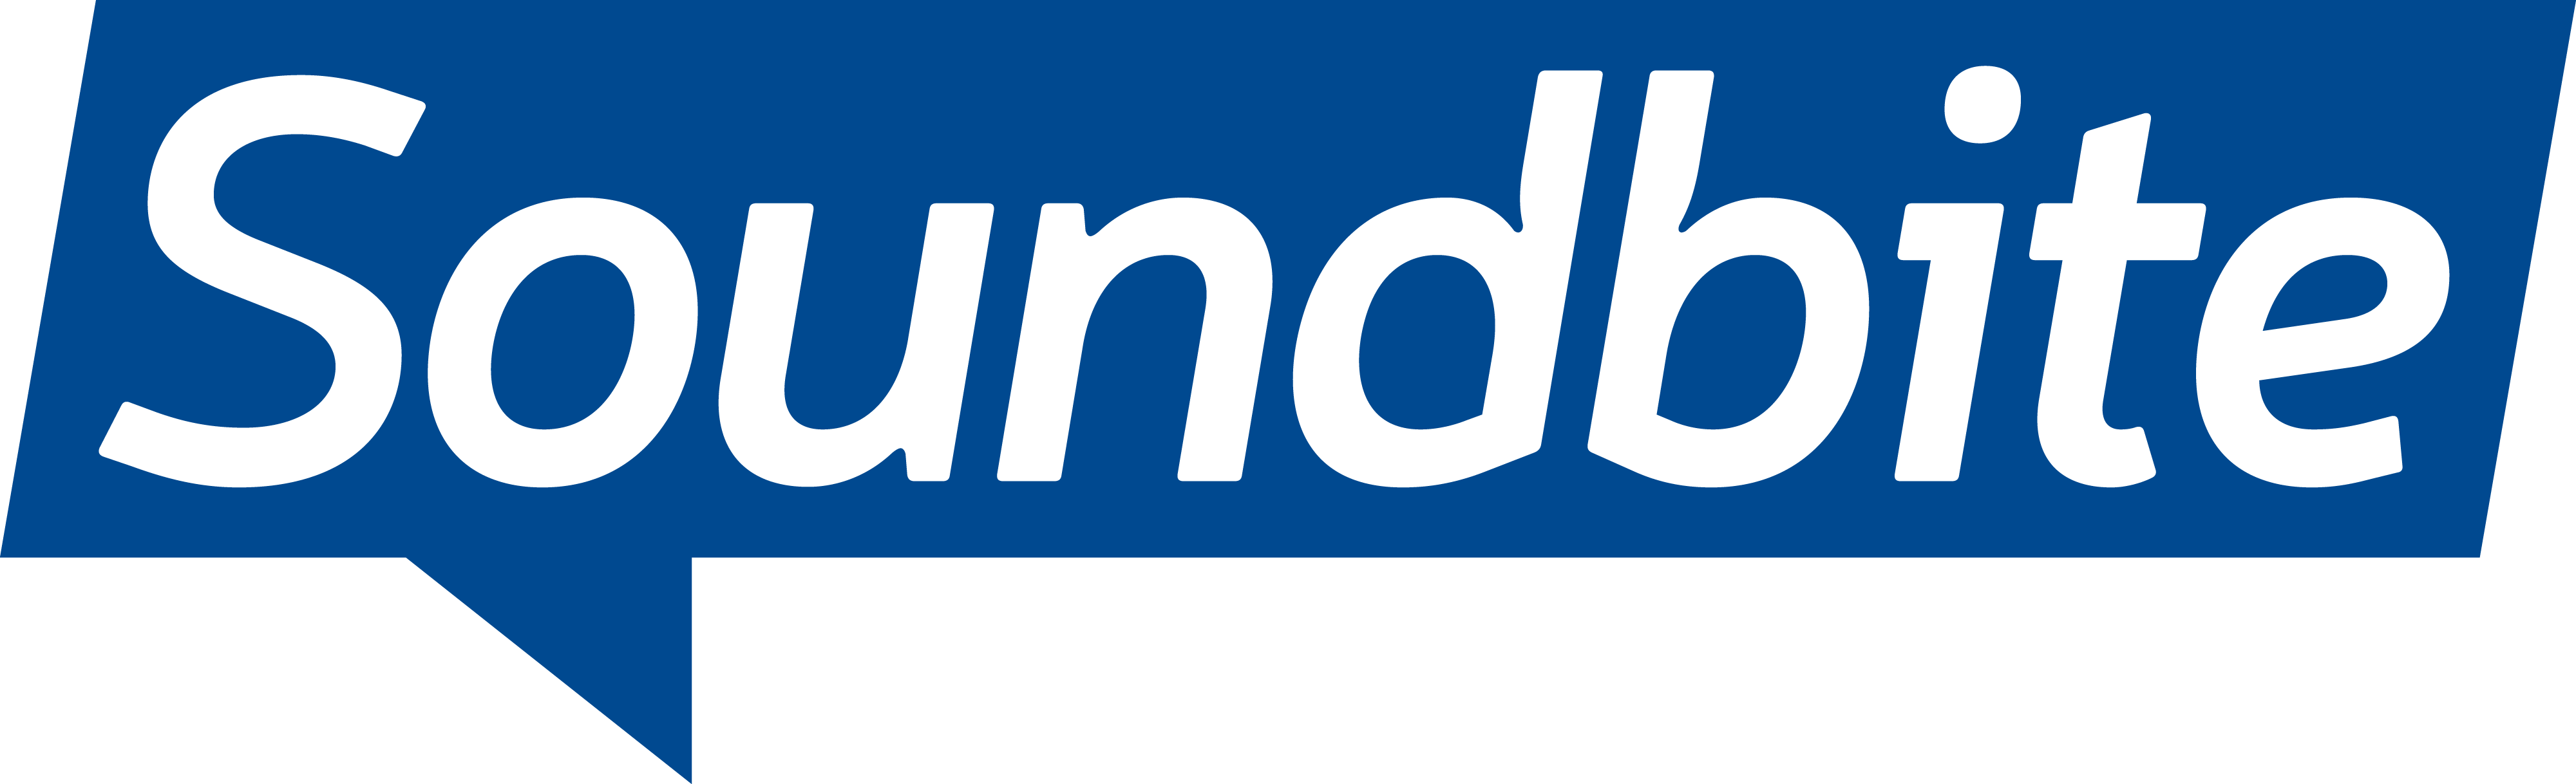 Soundbite logo